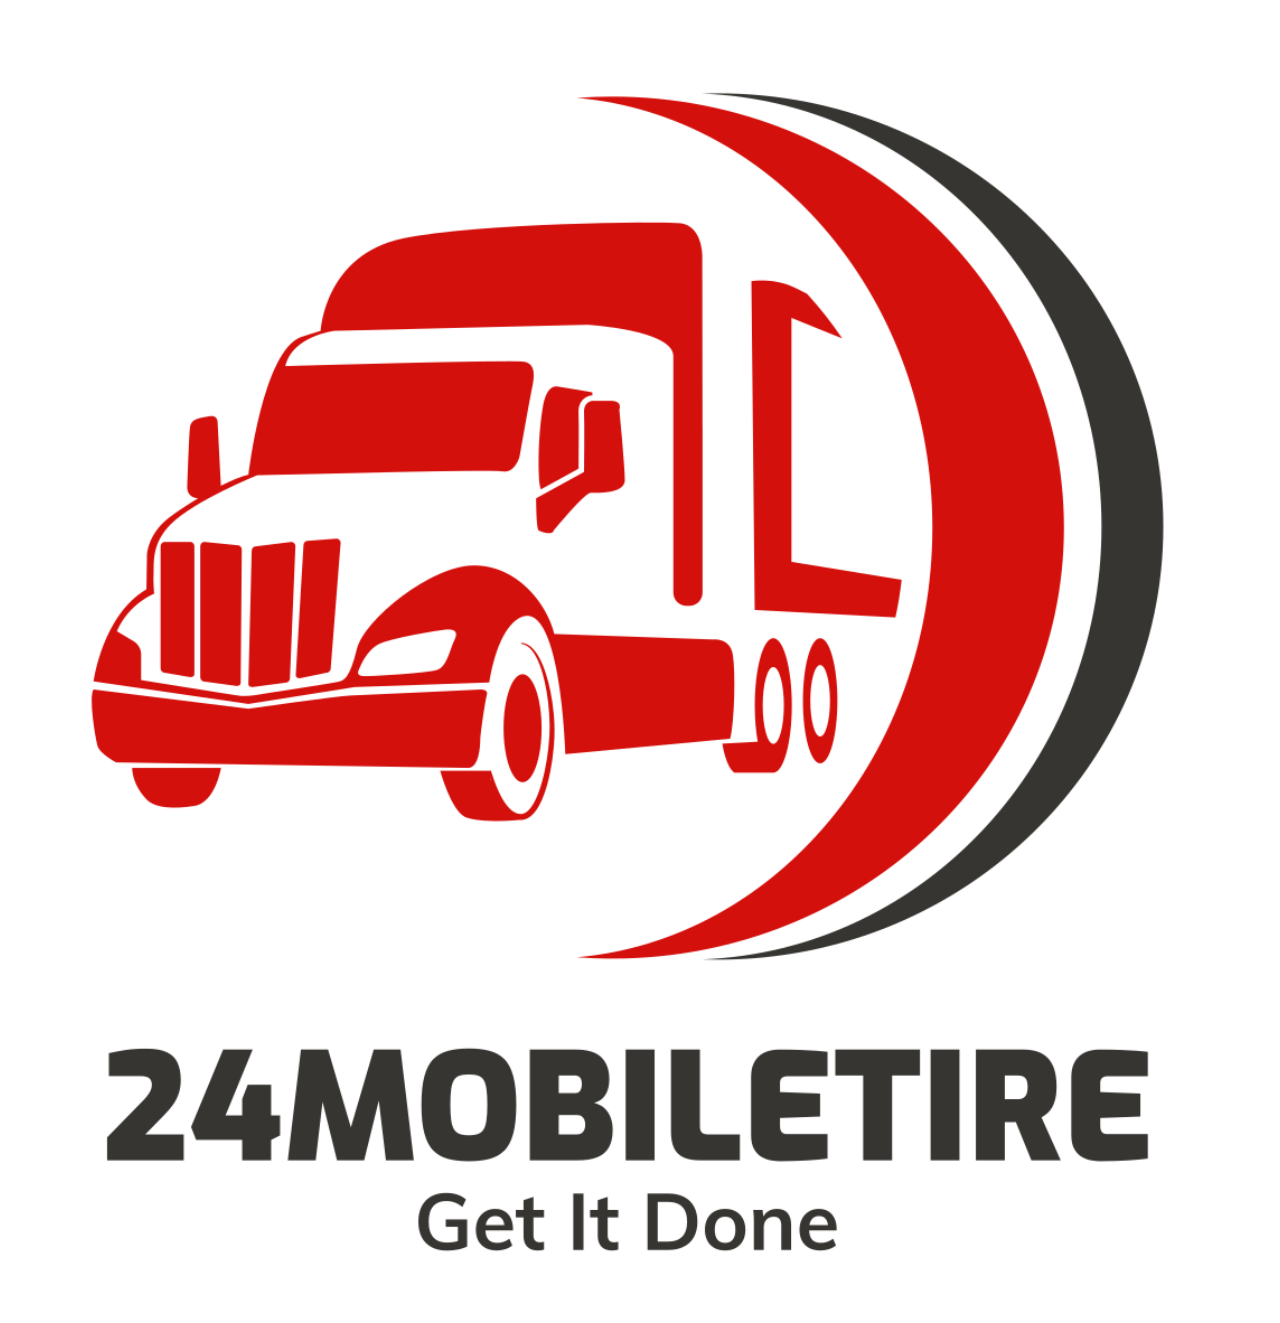 24mobiletire's web page